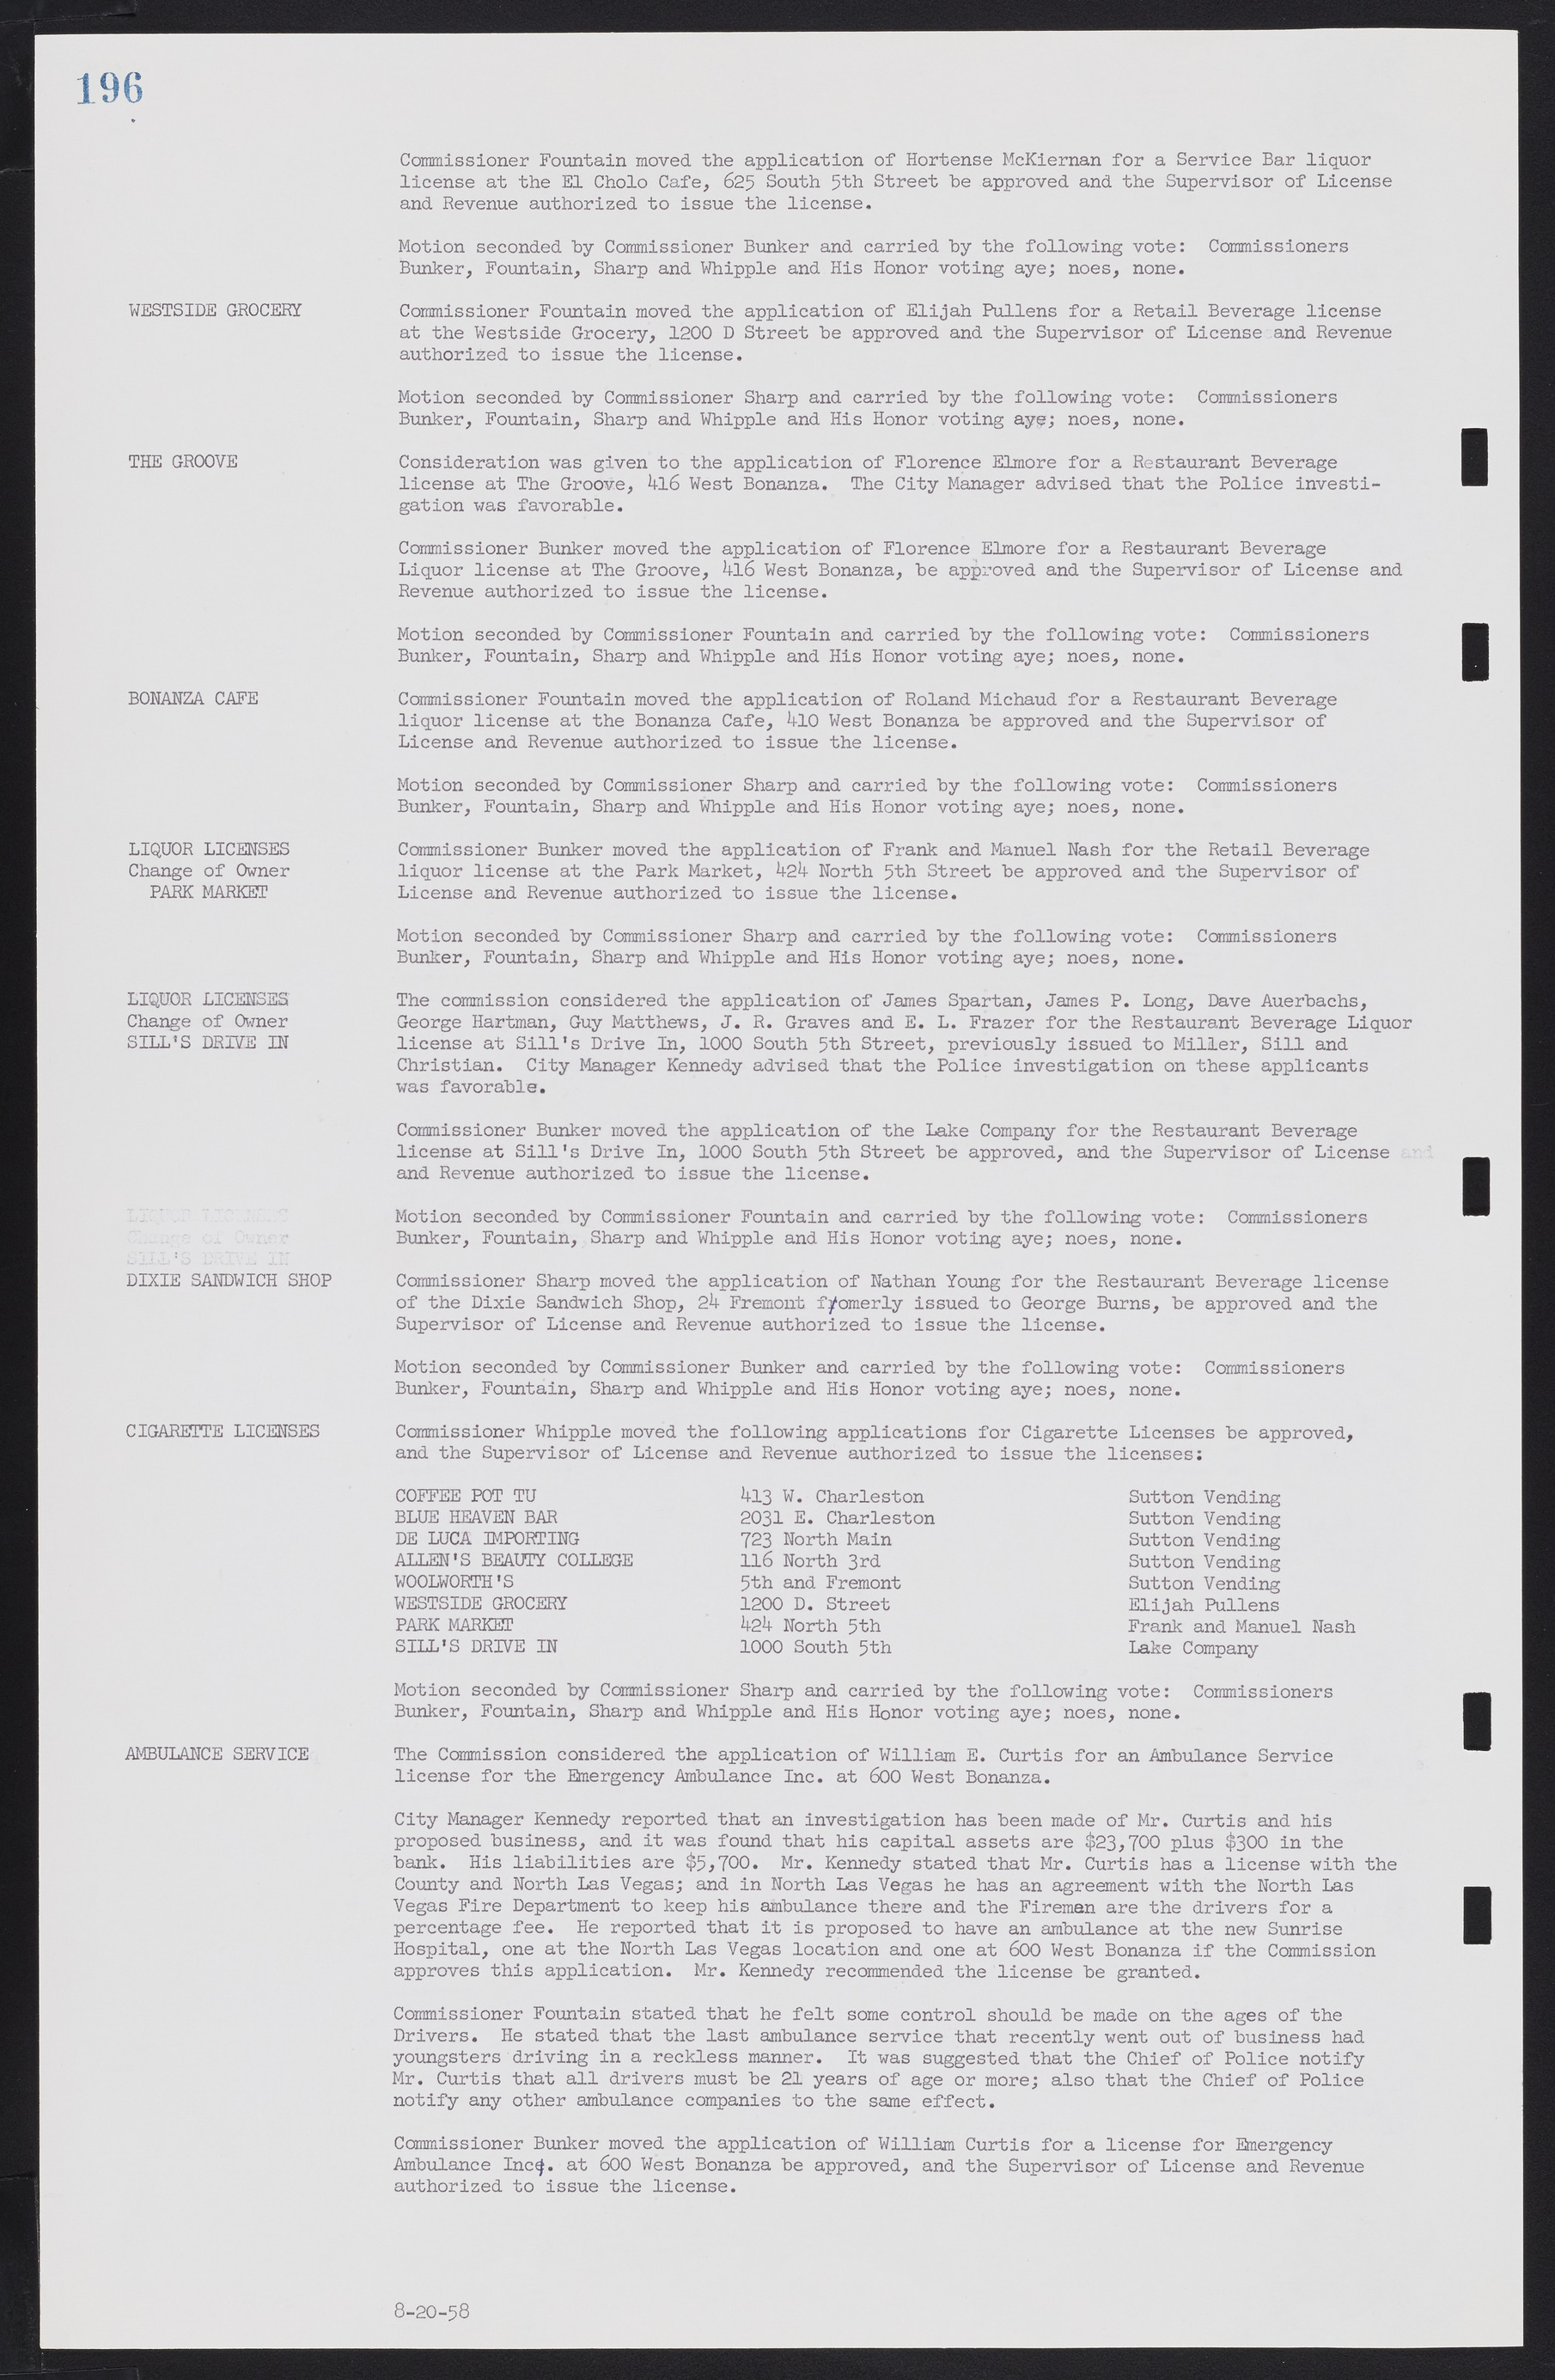 Las Vegas City Commission Minutes, November 20, 1957 to December 2, 1959, lvc000011-200